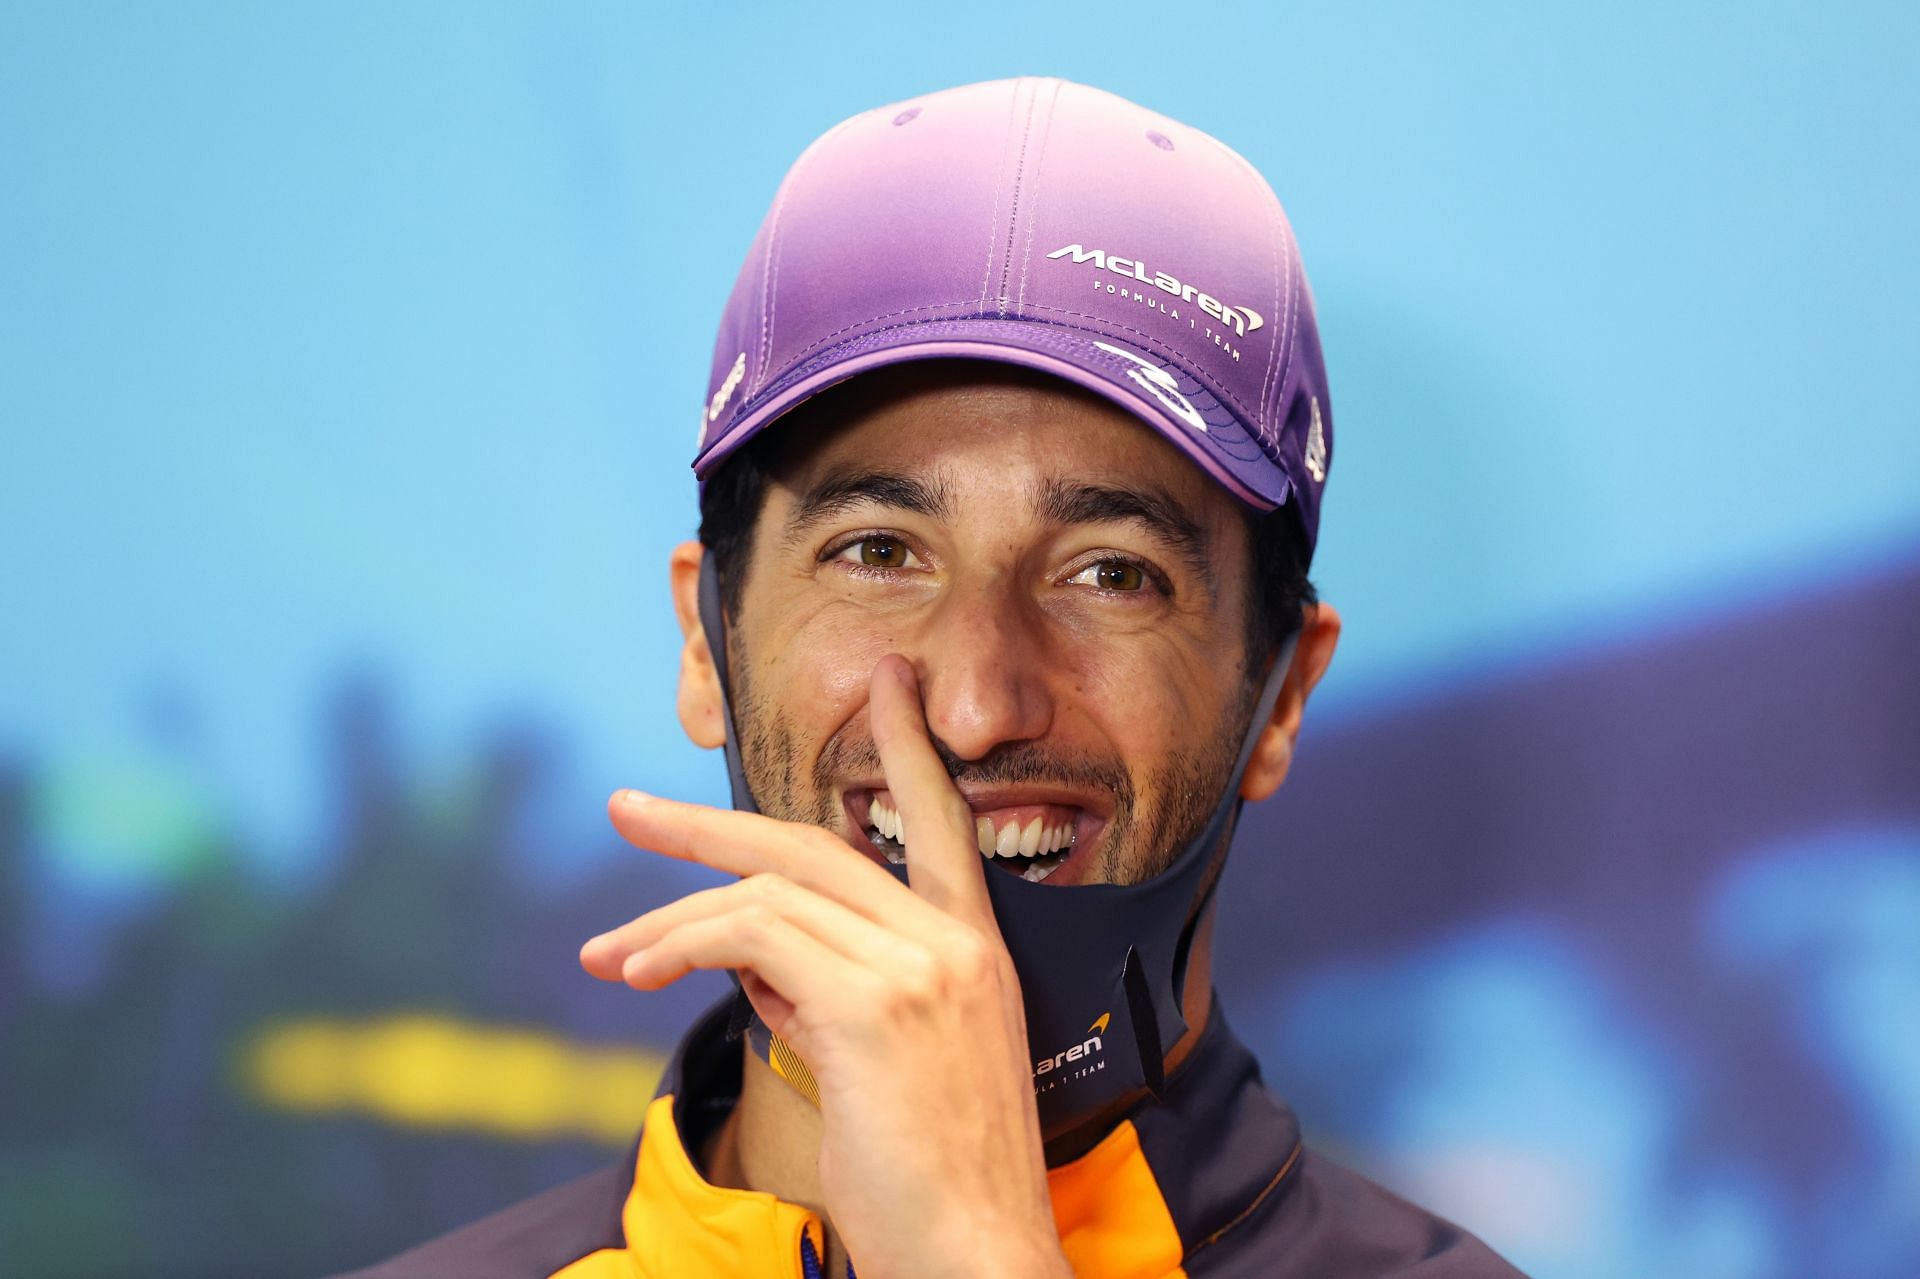 F1 Grand Prix of Australia - Practice - Daniel Ricciardo in Melbourne